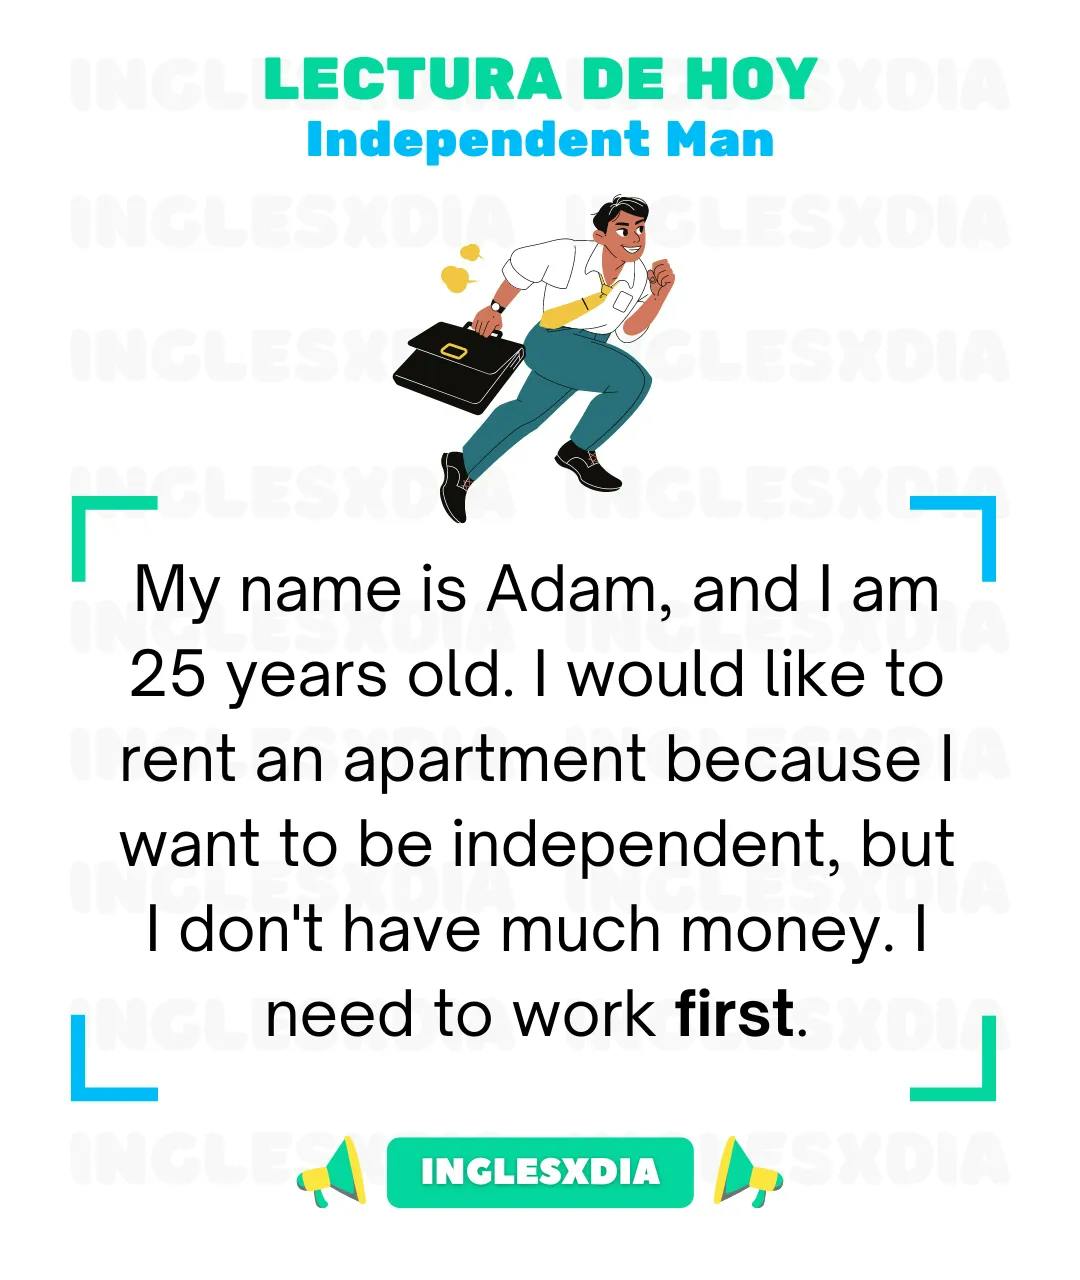 Independent Man